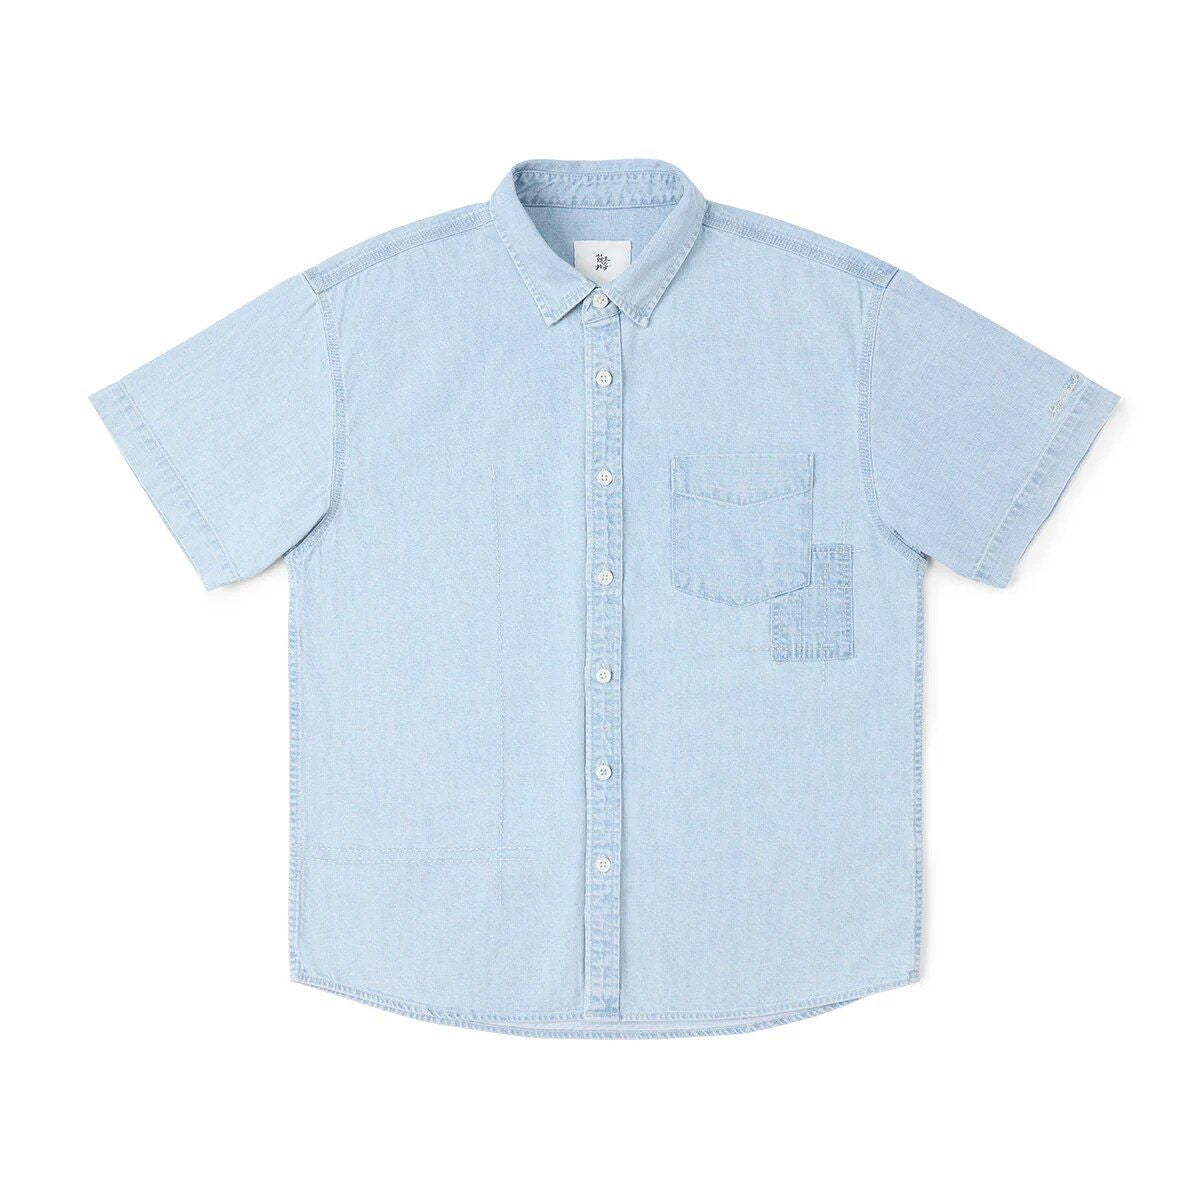 Men's summer denim shirt featuring short sleeves in light wash